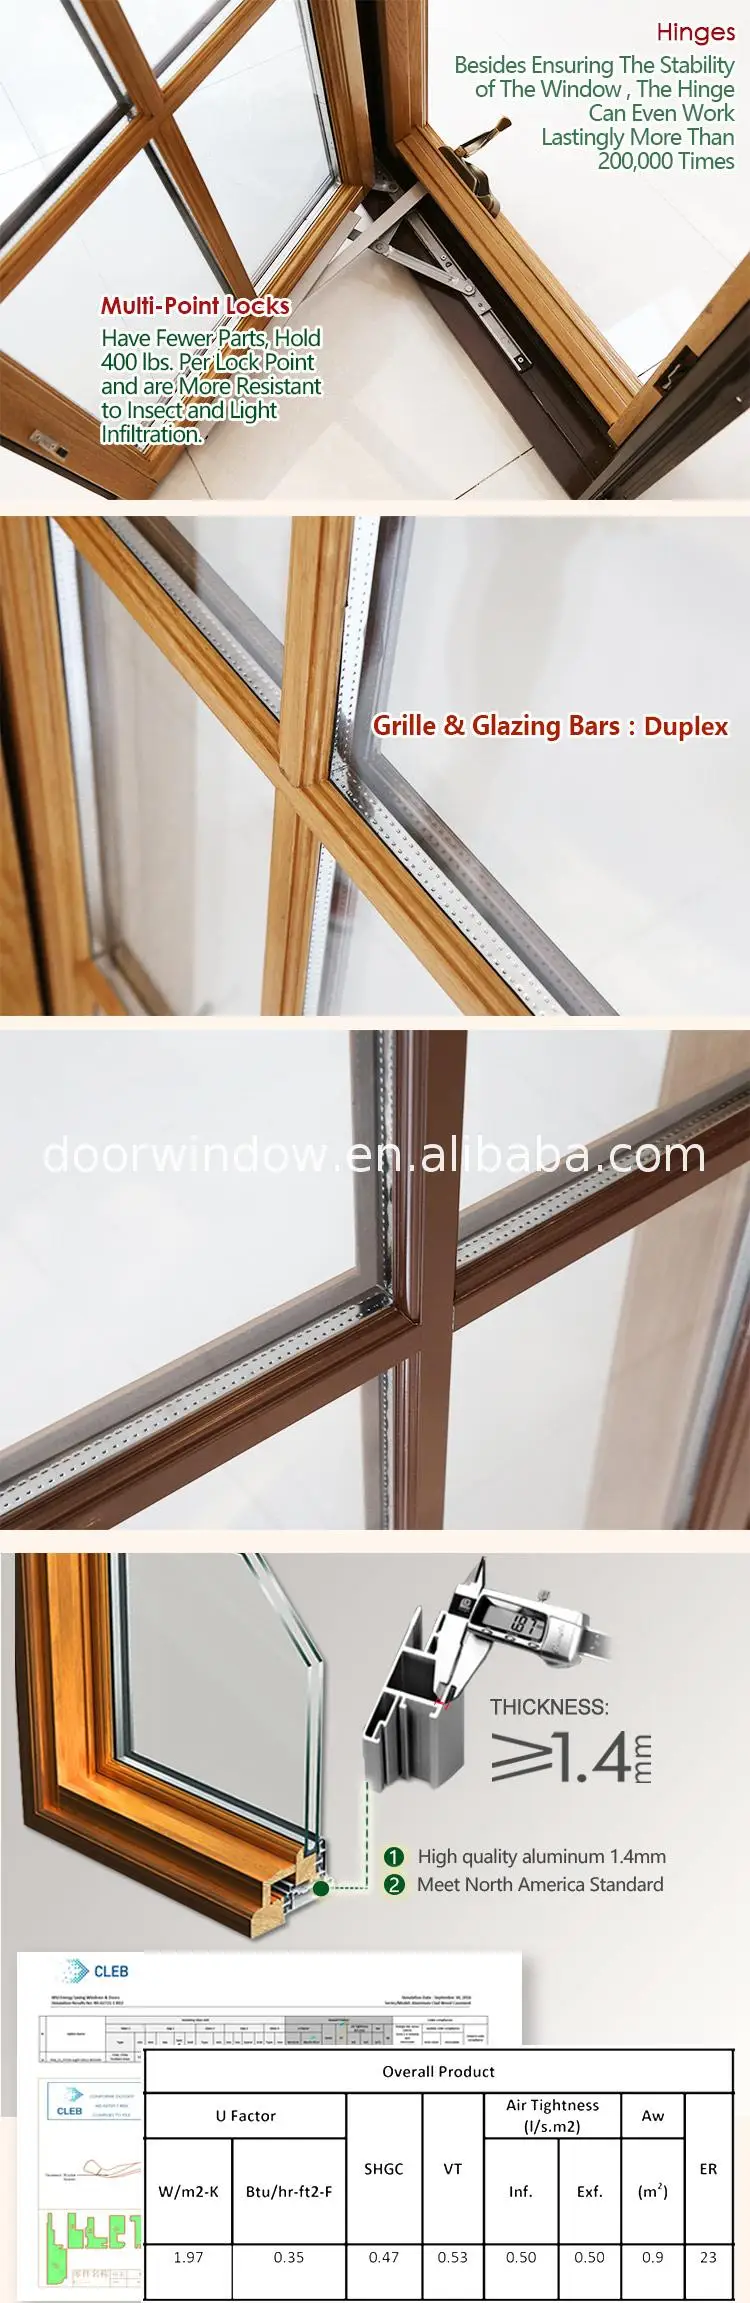 Best Quality wooden windows uk poland online